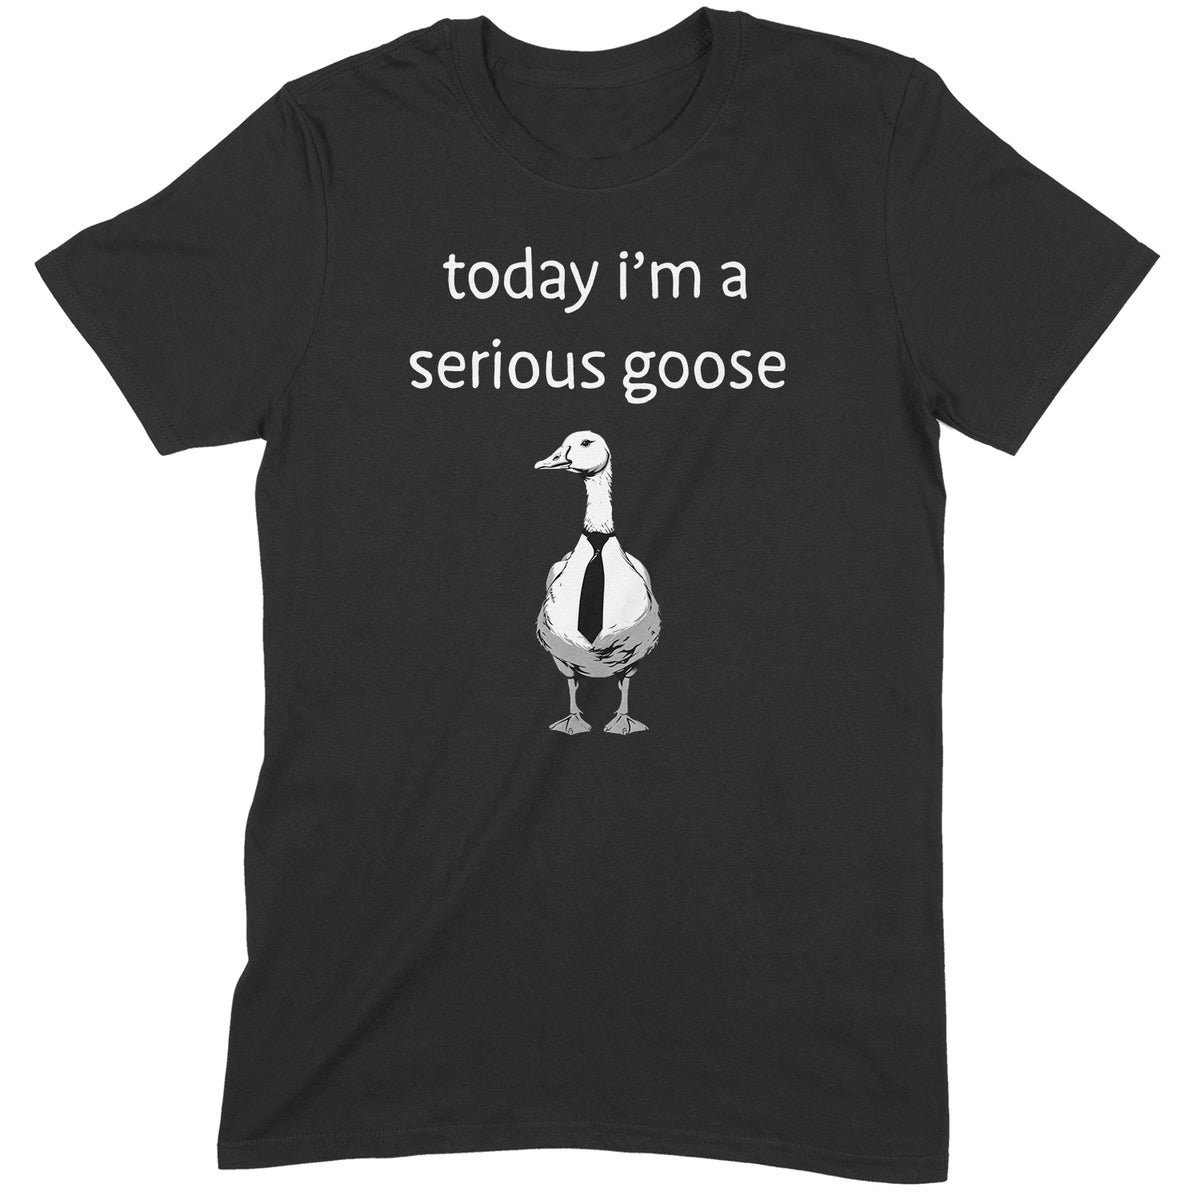 "Serious Goose" Premium Midweight Ringspun Cotton T-Shirt - Mens/Womens Fits